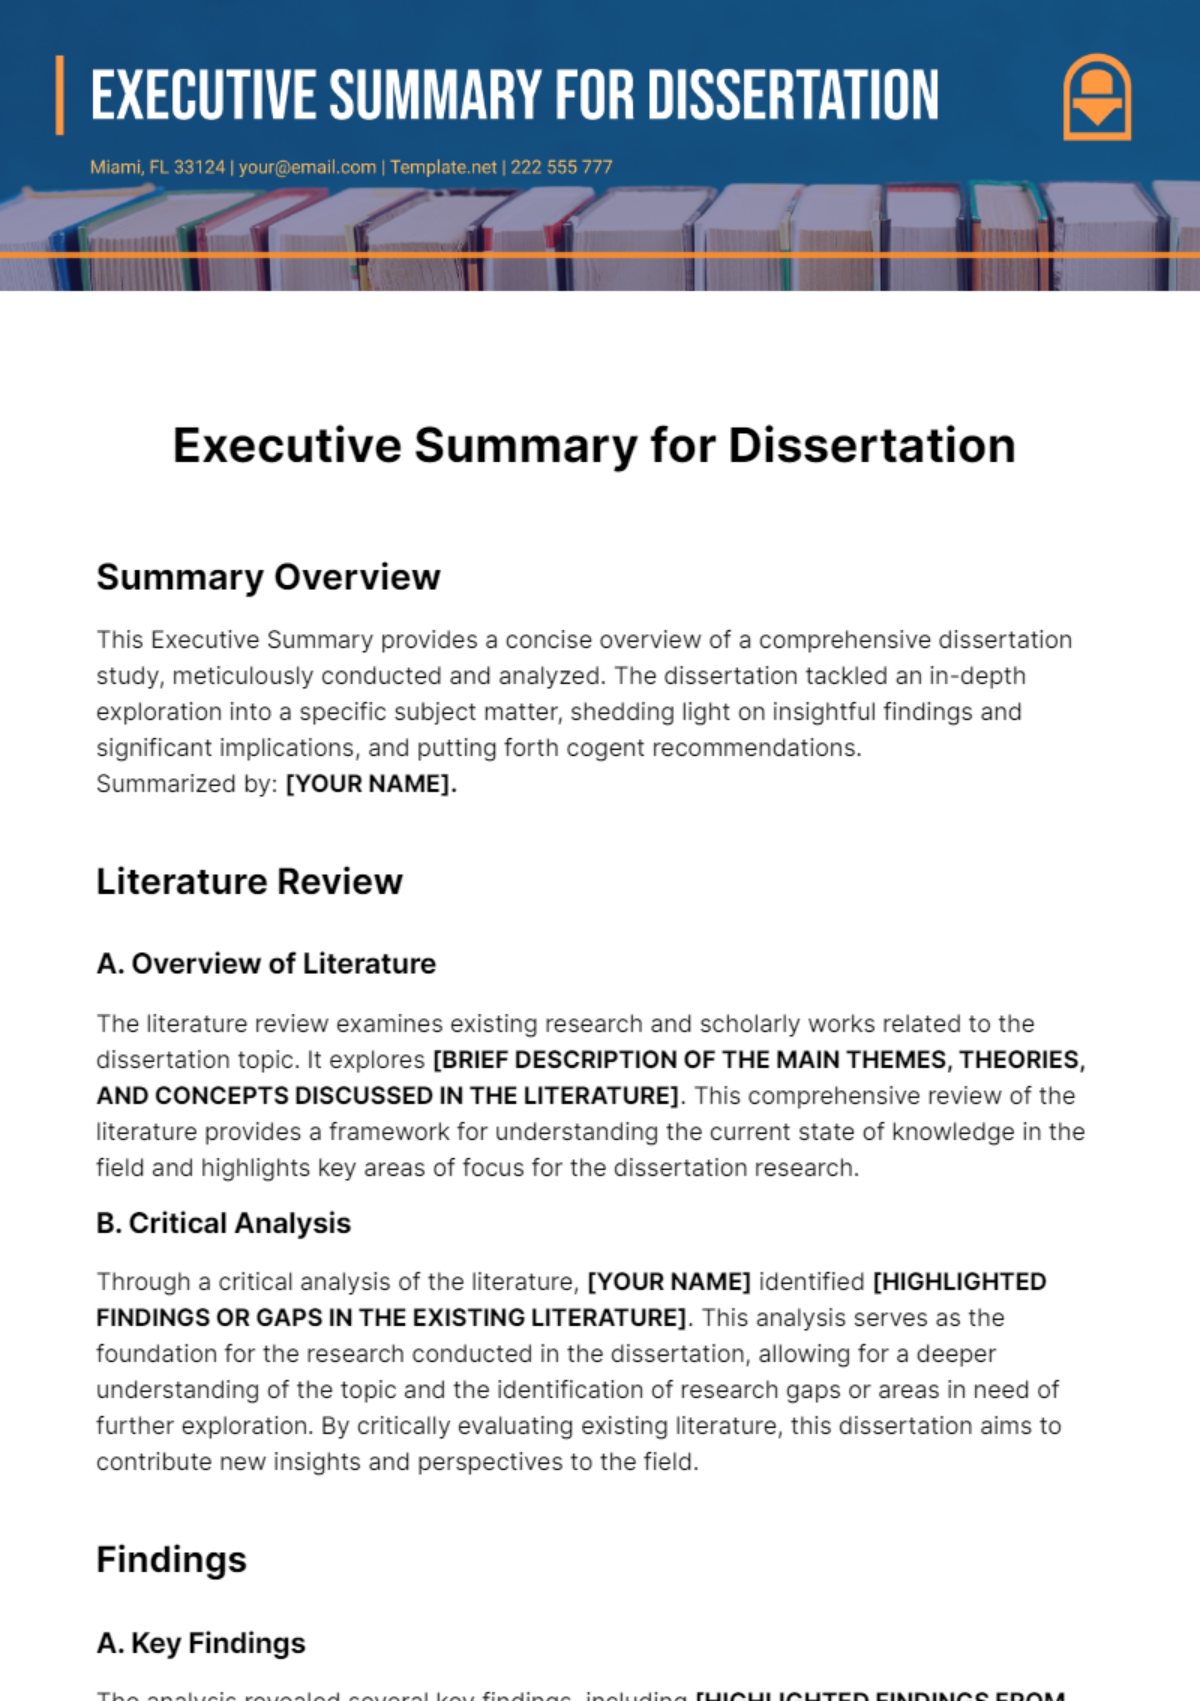 Executive Summary for Dissertation Template